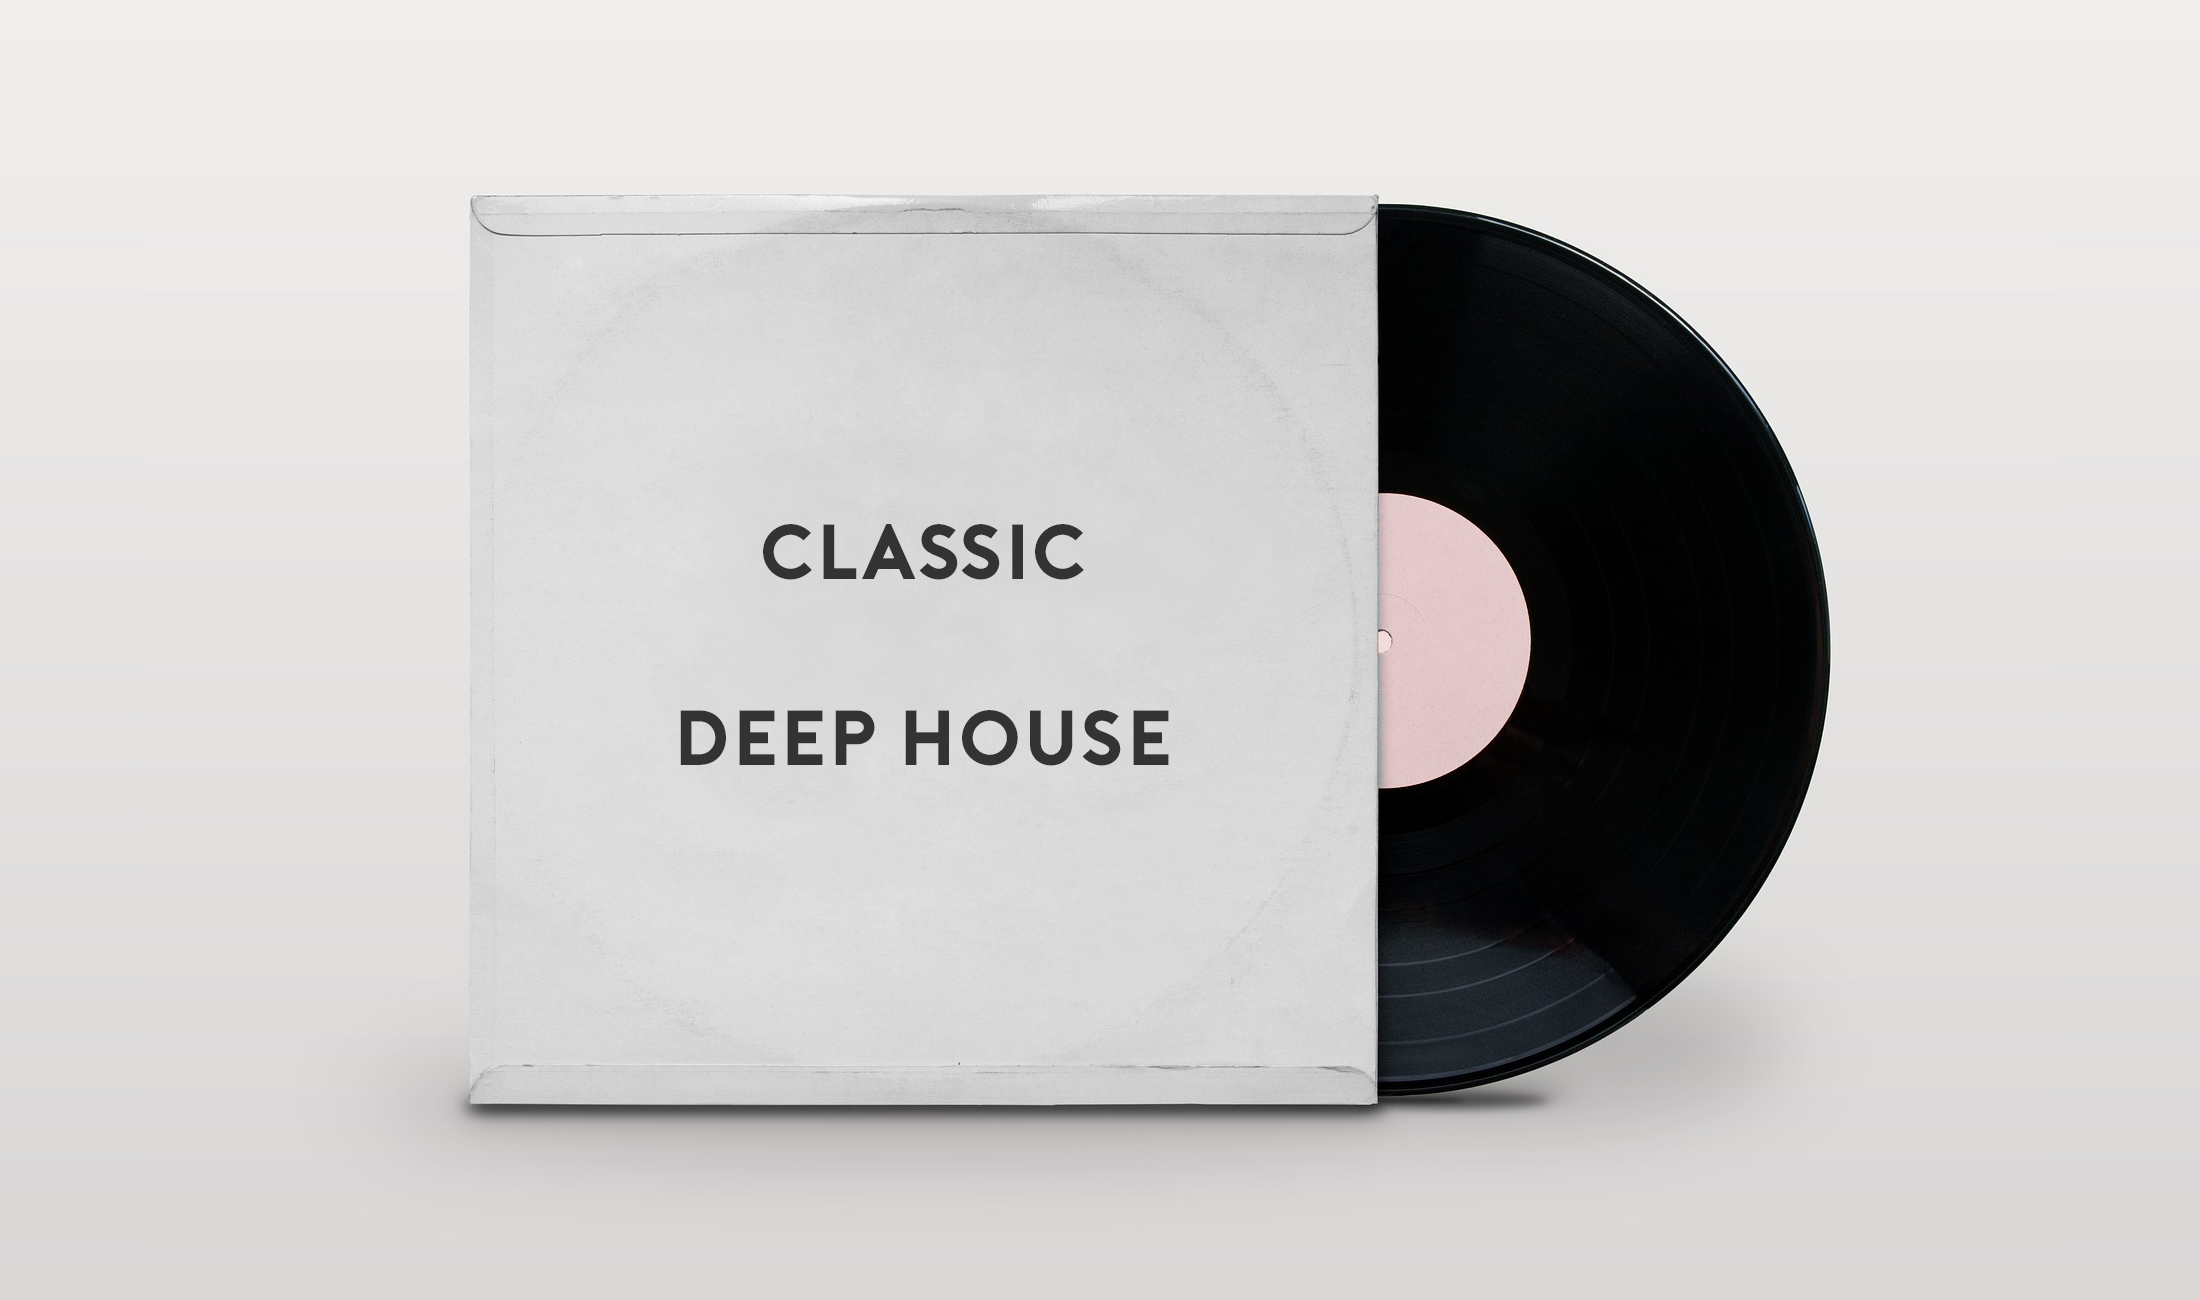 Essentials: Classic Deep House